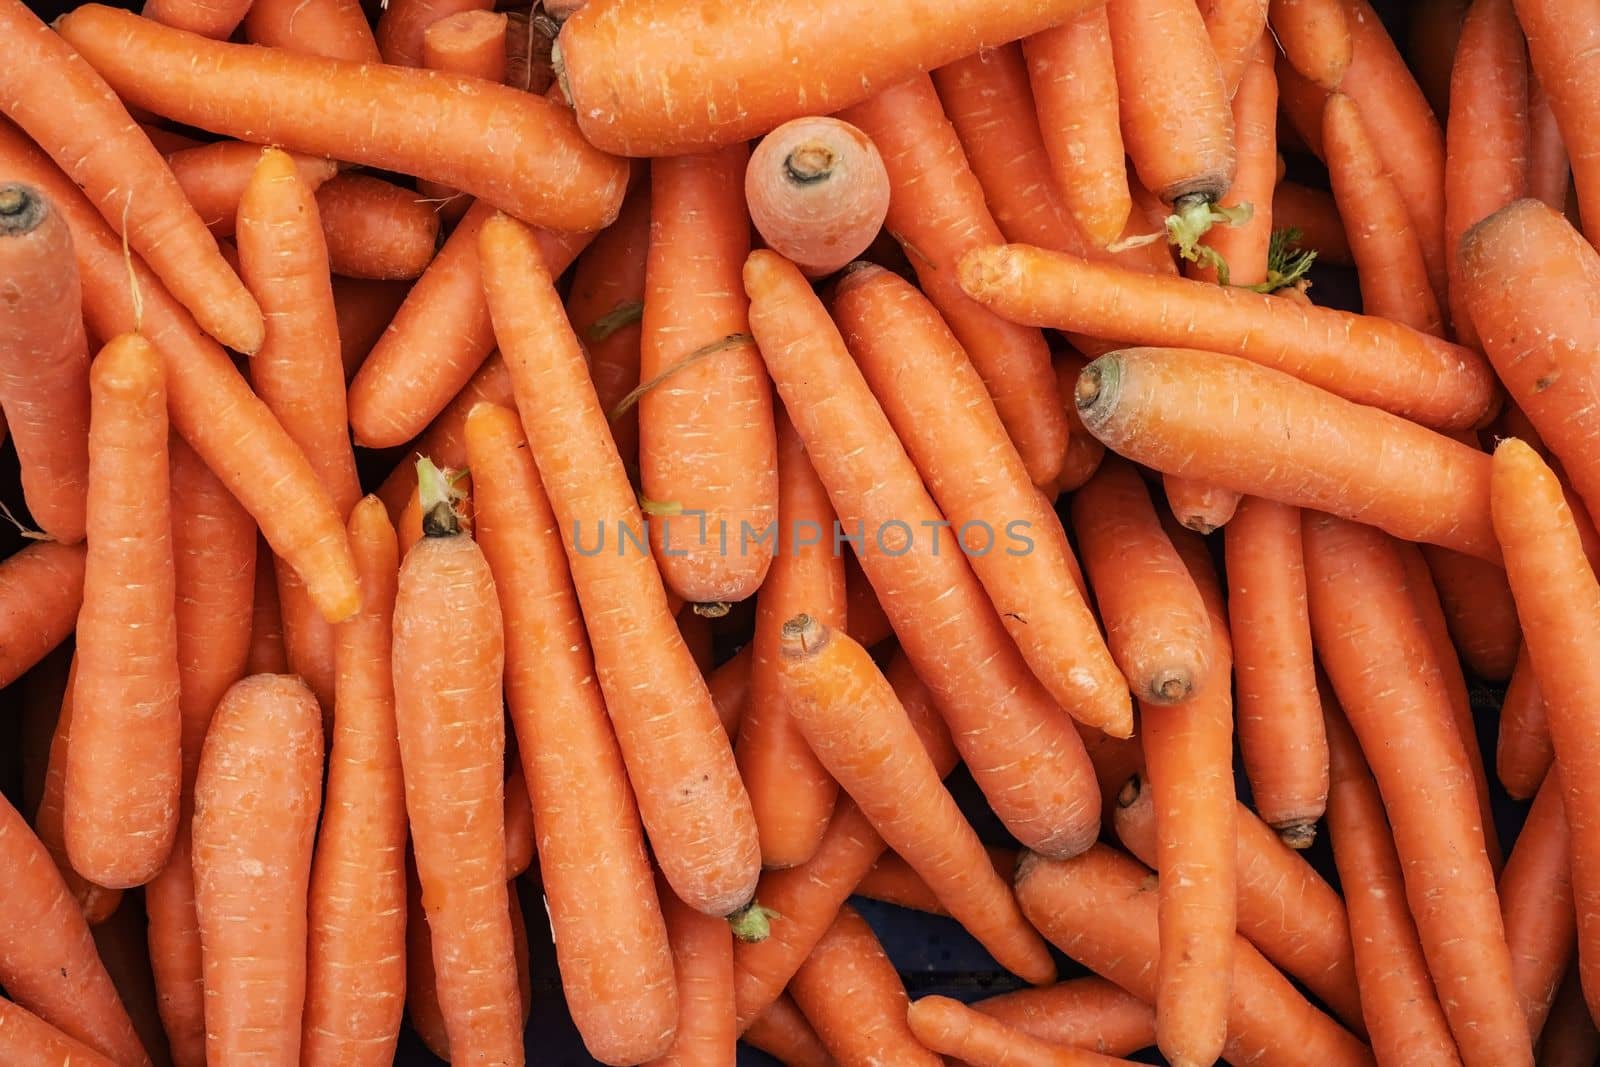 Orange organic carrots at a local farmers' market in Fethiye, Turkeye